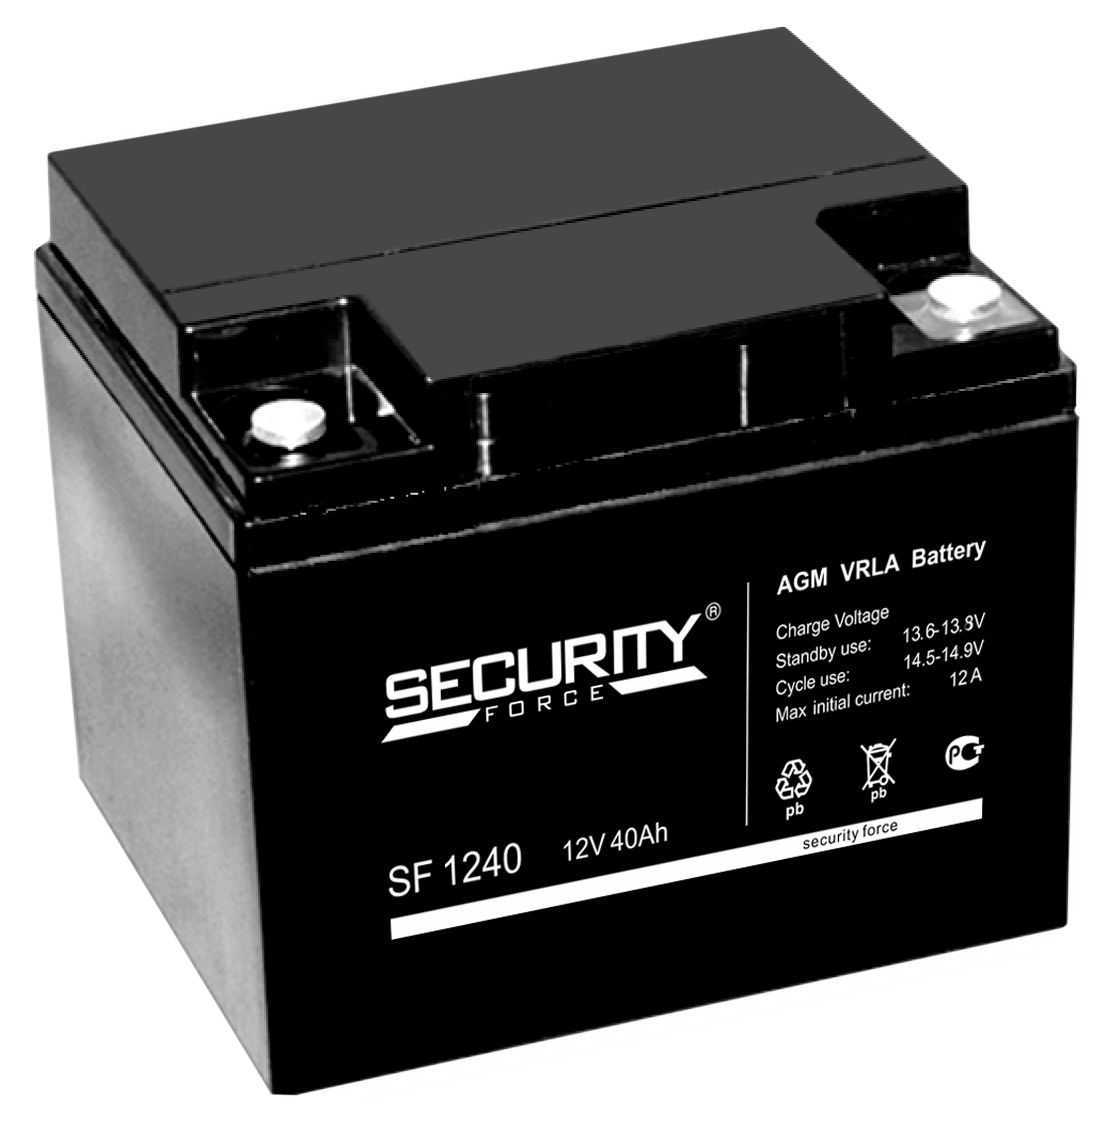 Security Force SF 1240 (АКБ-40) Аккумуляторы фото, изображение